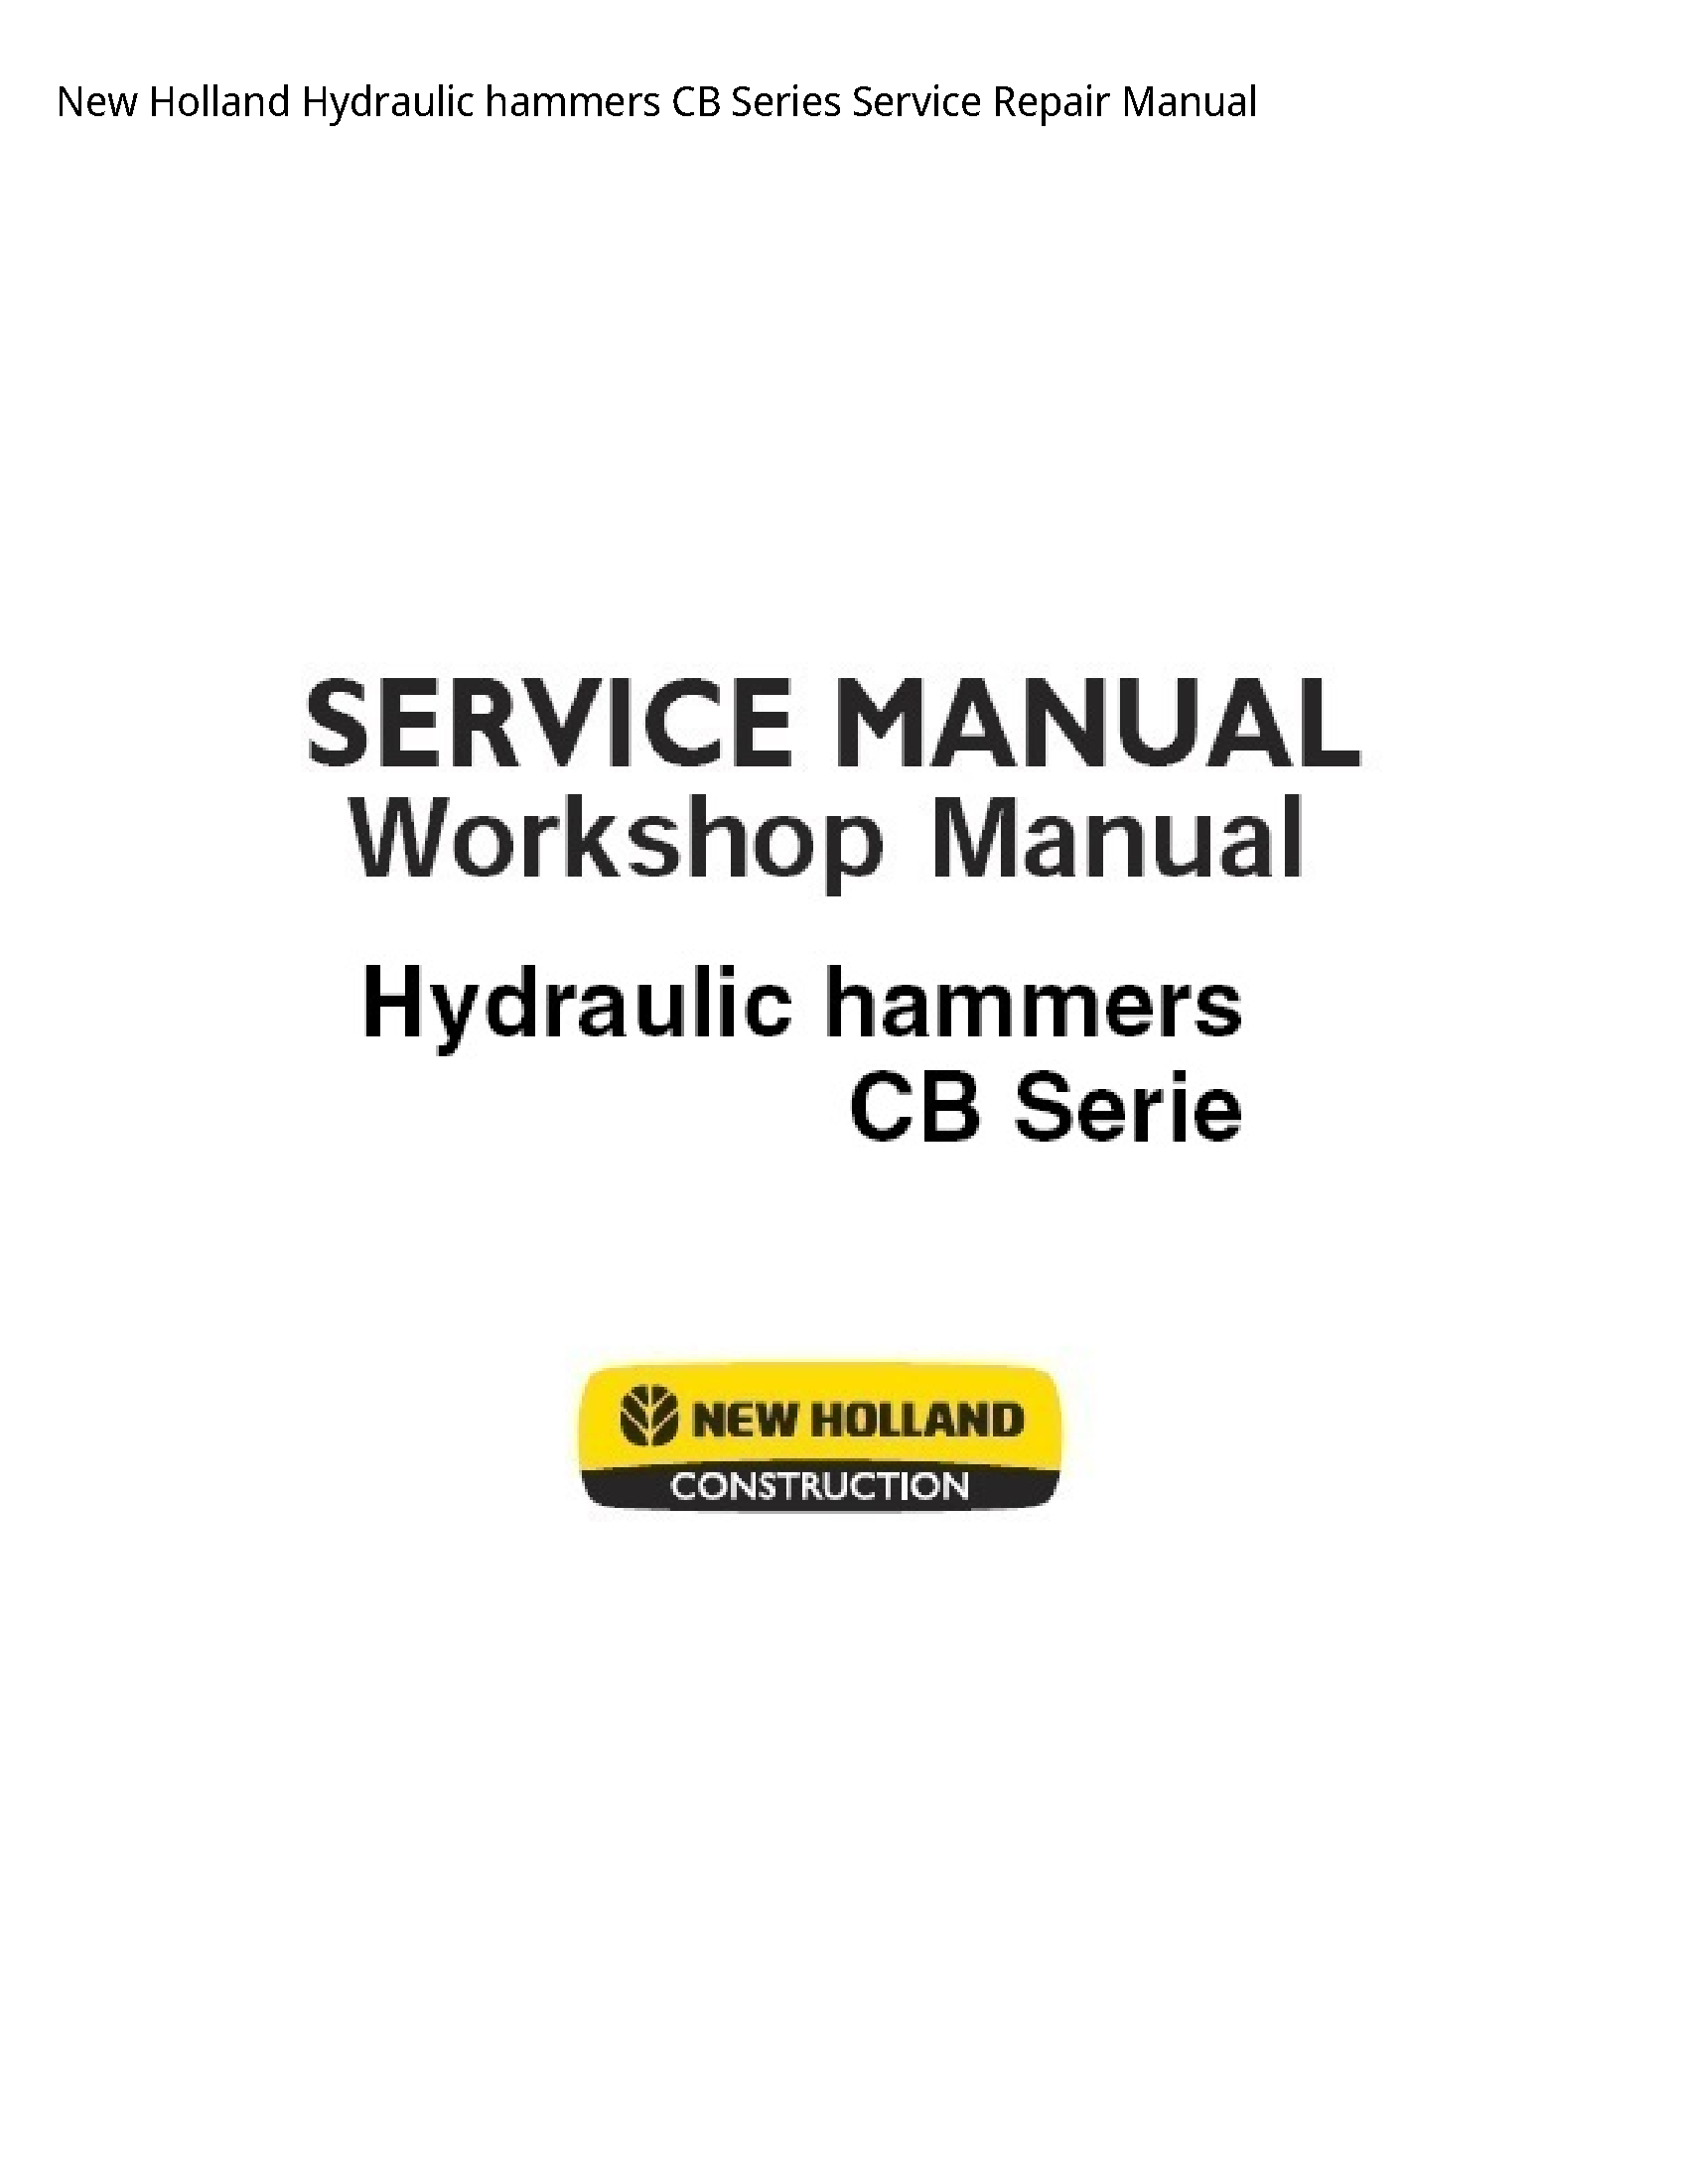 New Holland Hydraulic hammers CB Series manual